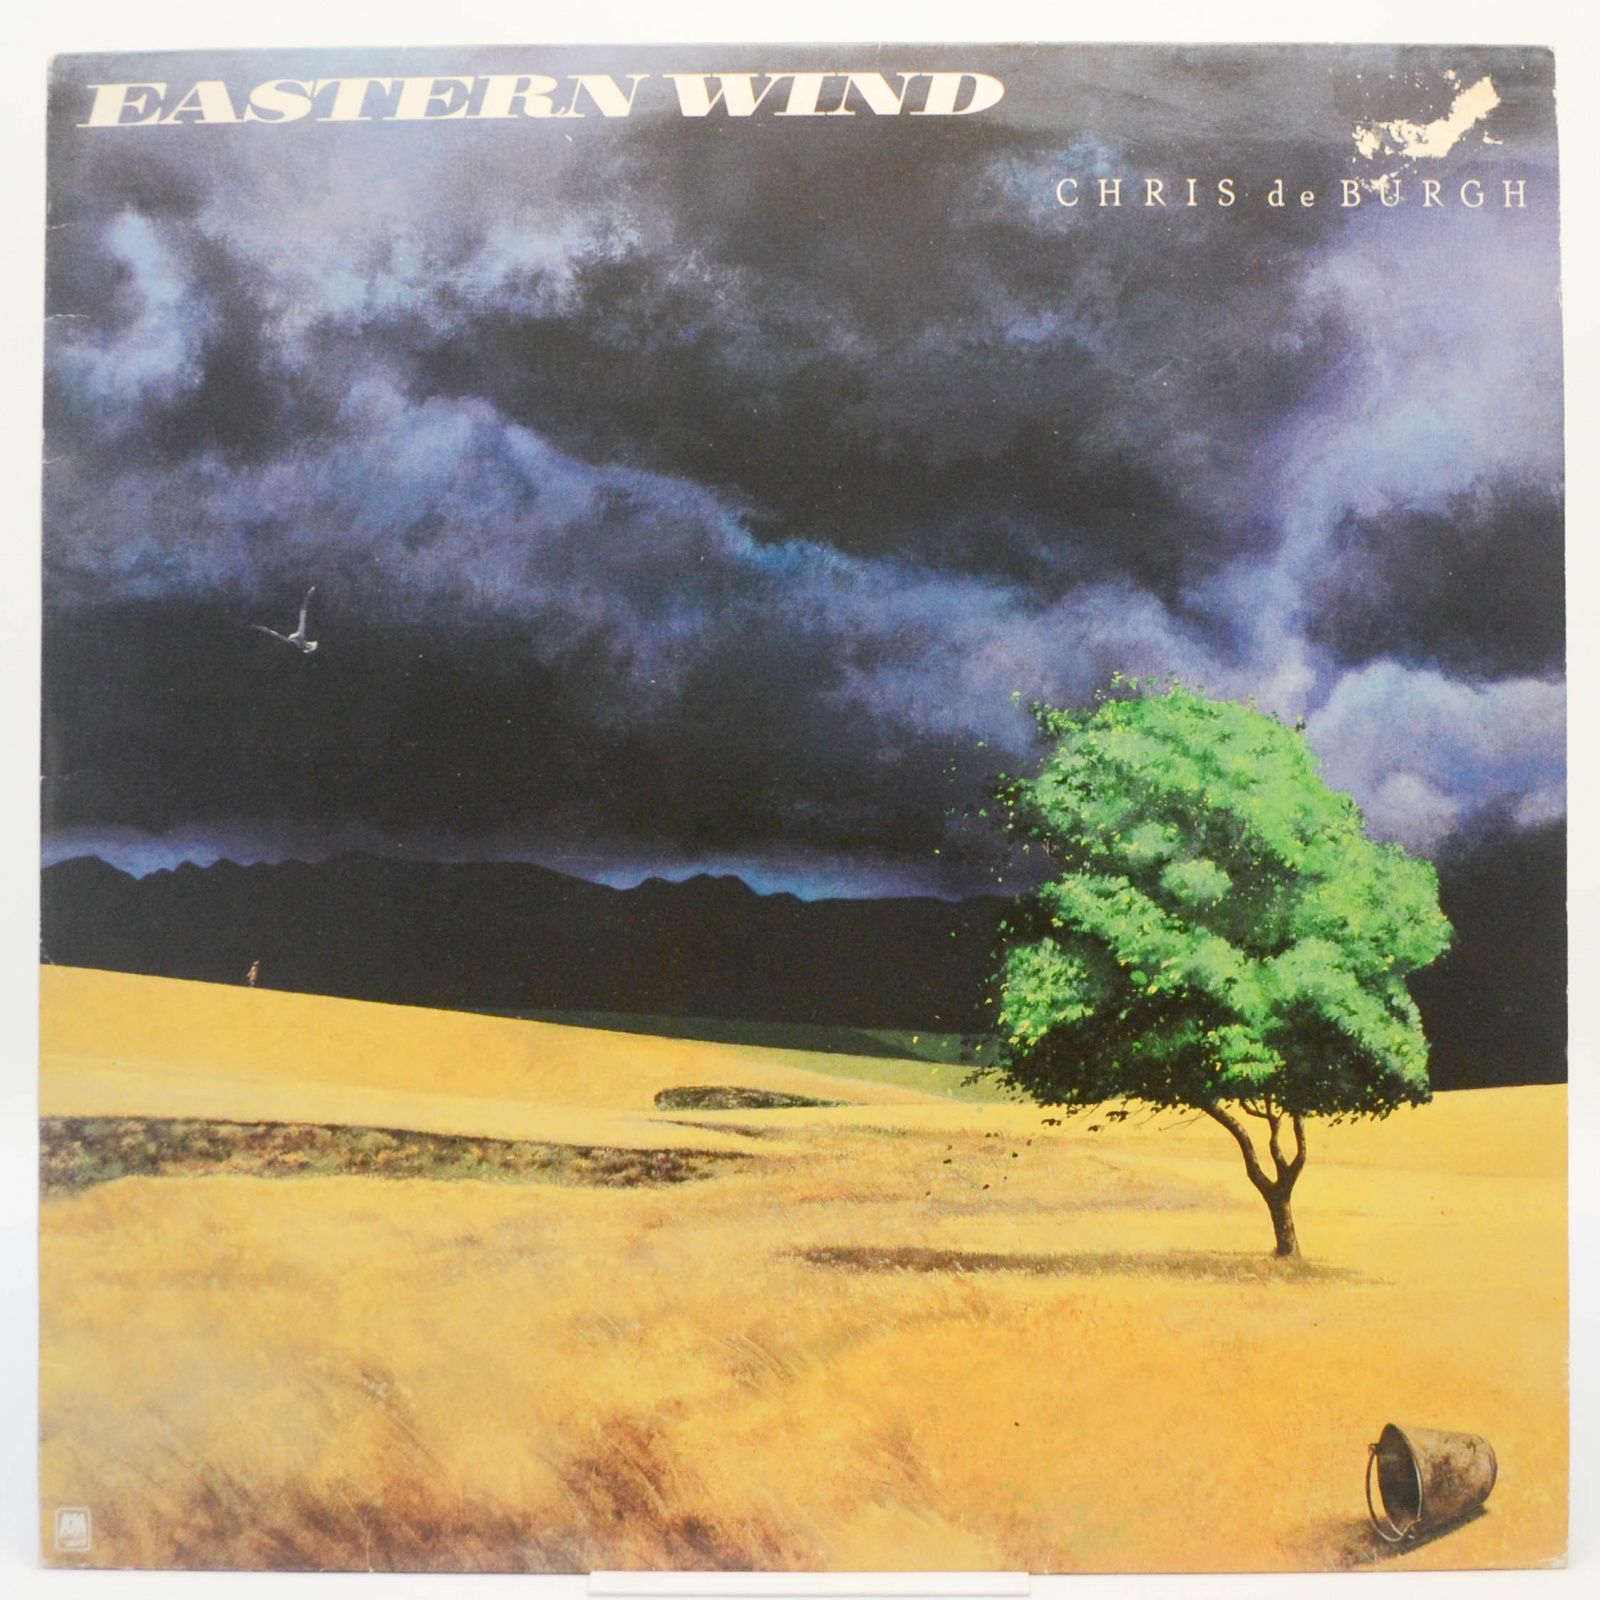 Chris de Burgh — Eastern Wind, 1980